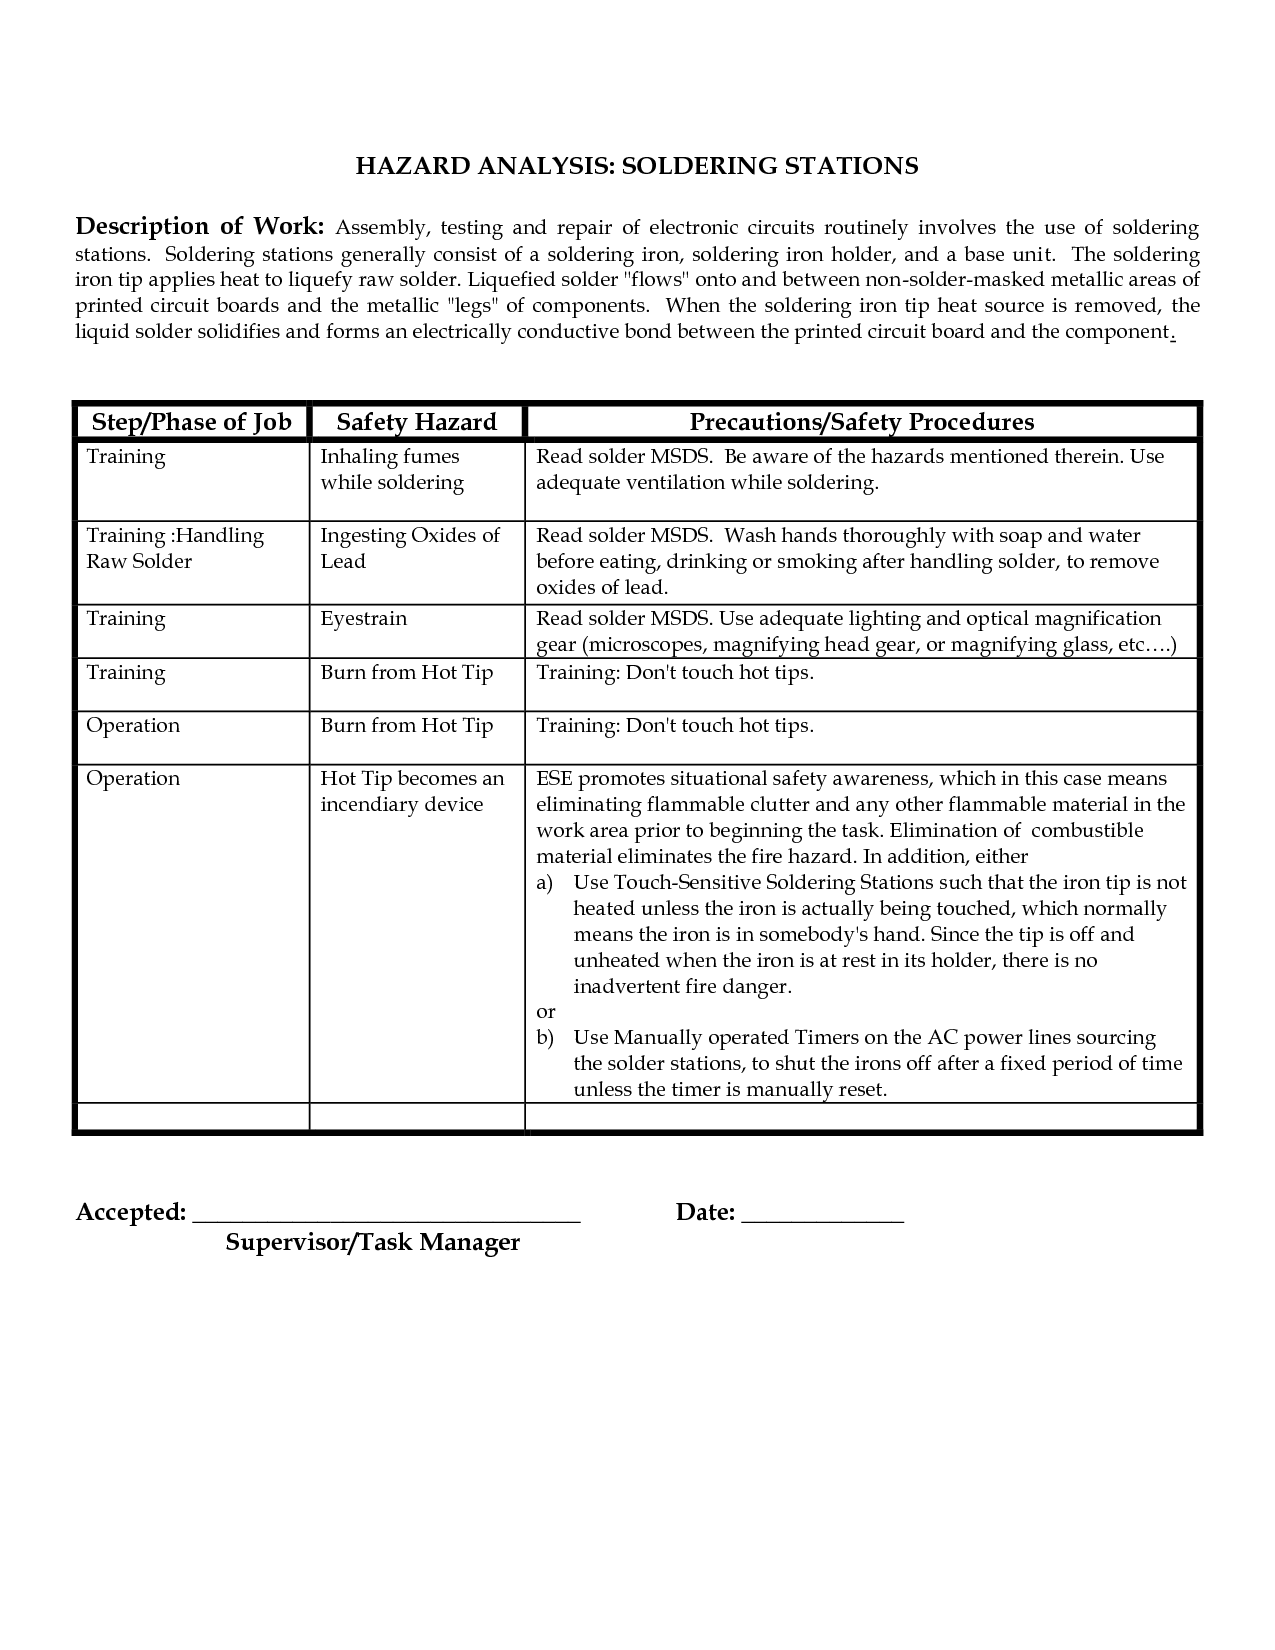 Job Hazard Analysis Form Template Image